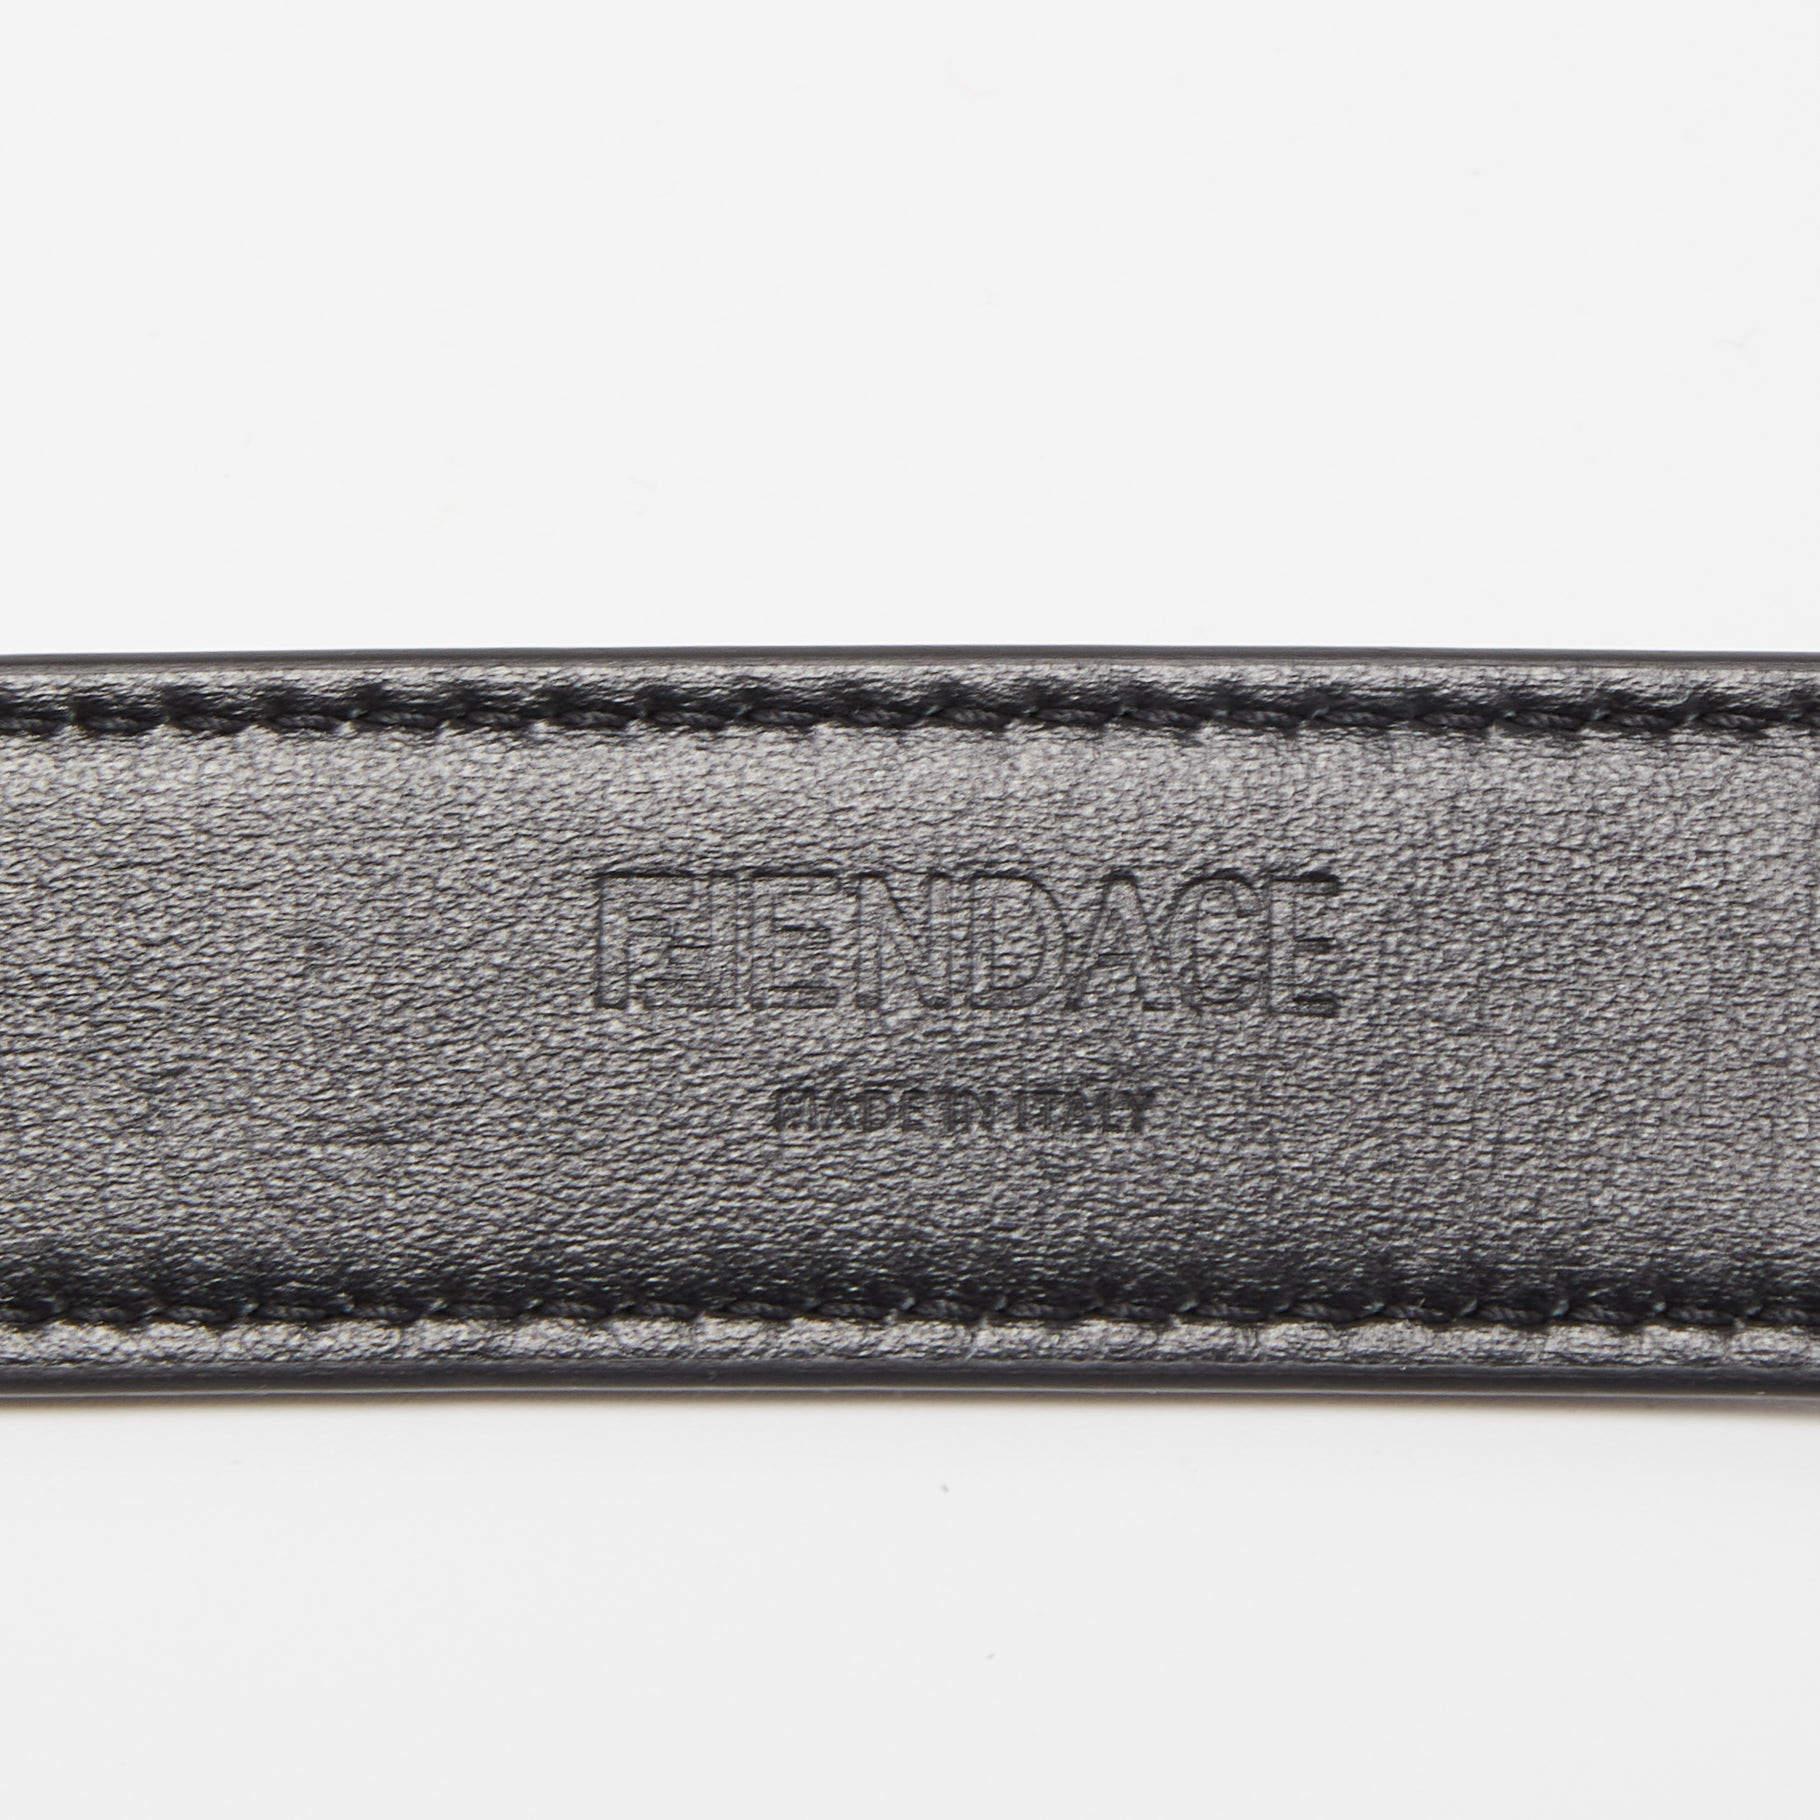 Fendi x Versace Black Leather Logo Letters Buckle Belt 90CM In New Condition For Sale In Dubai, Al Qouz 2